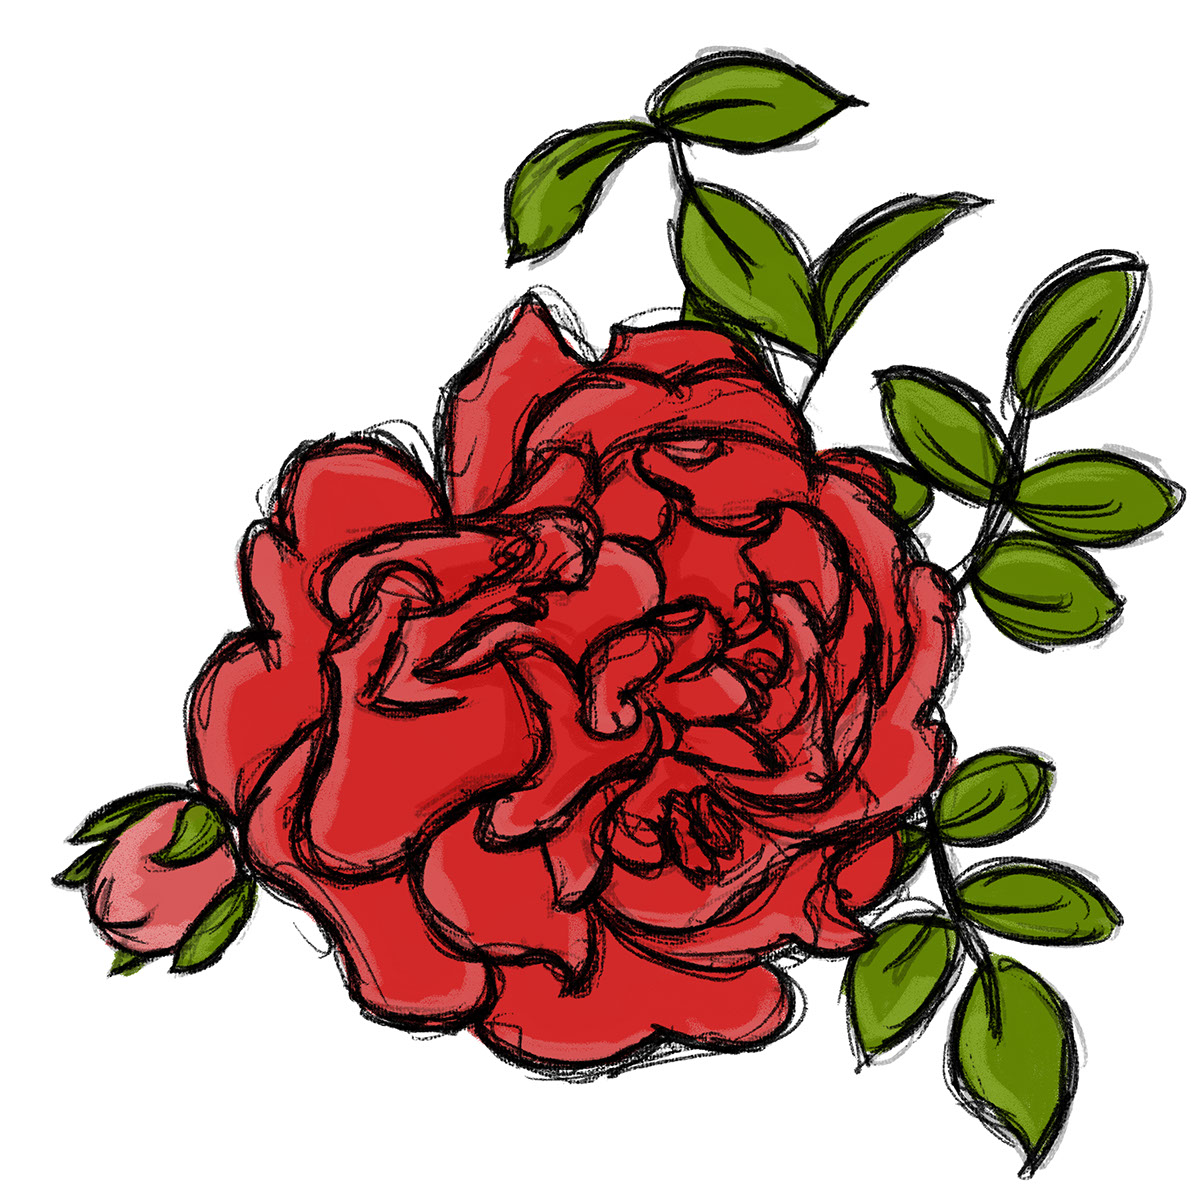 Big Red Rose rendition image